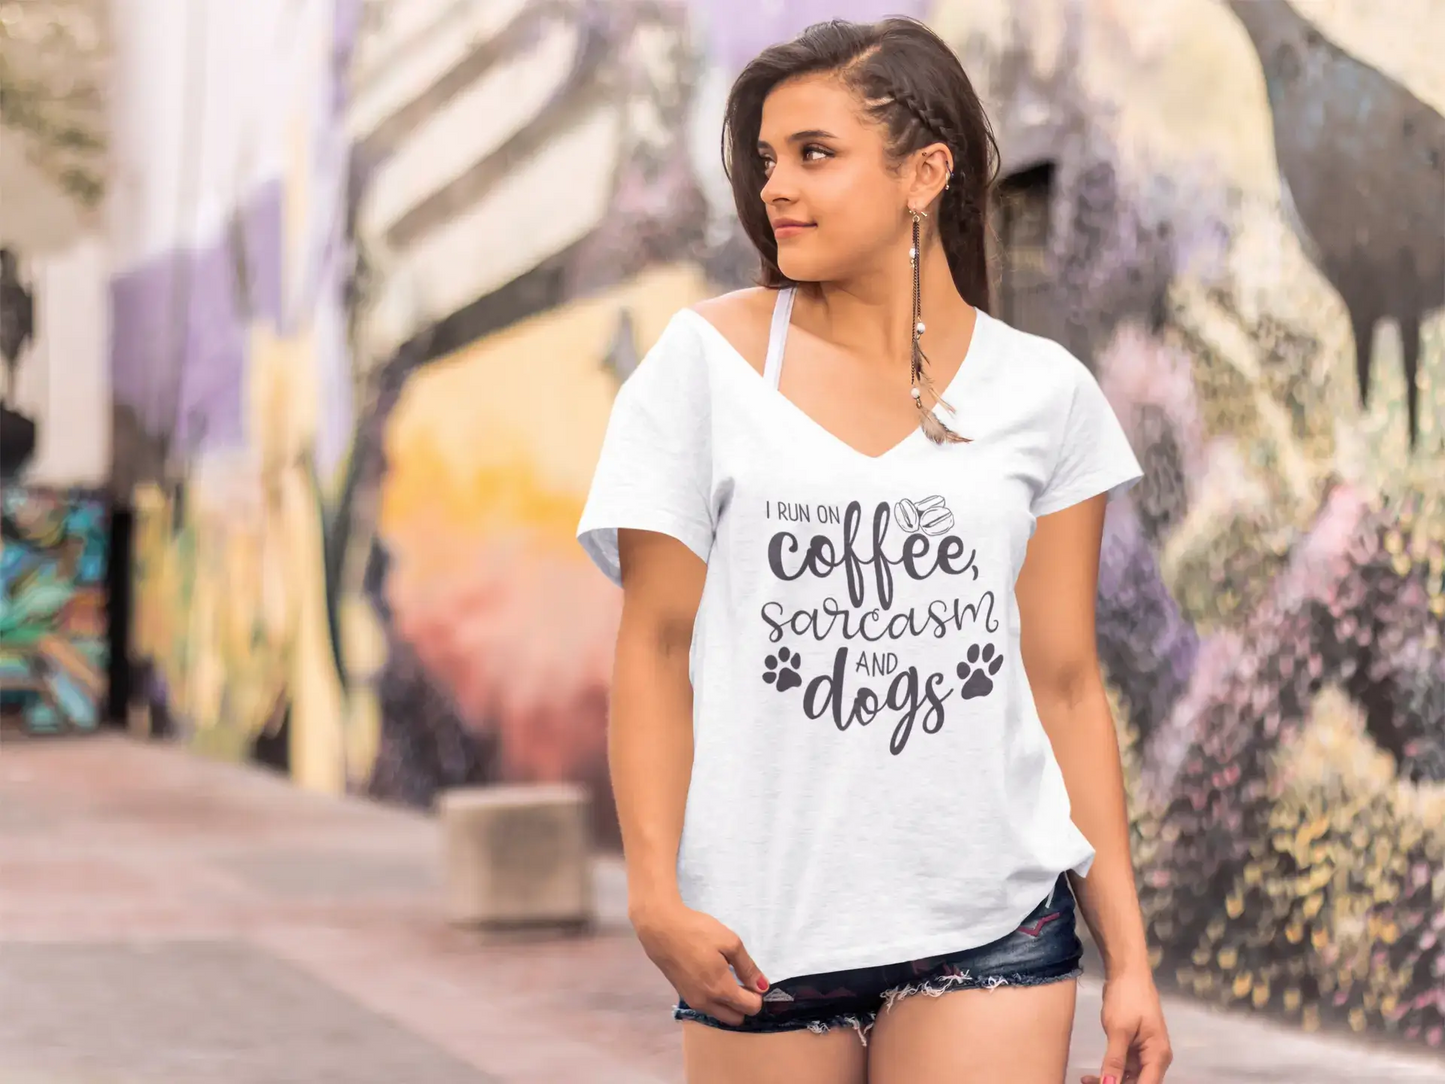 ULTRABASIC Damen T-Shirt I Run On Coffee, Sarcasm And Dogs – Kurzarm-T-Shirt-Oberteile